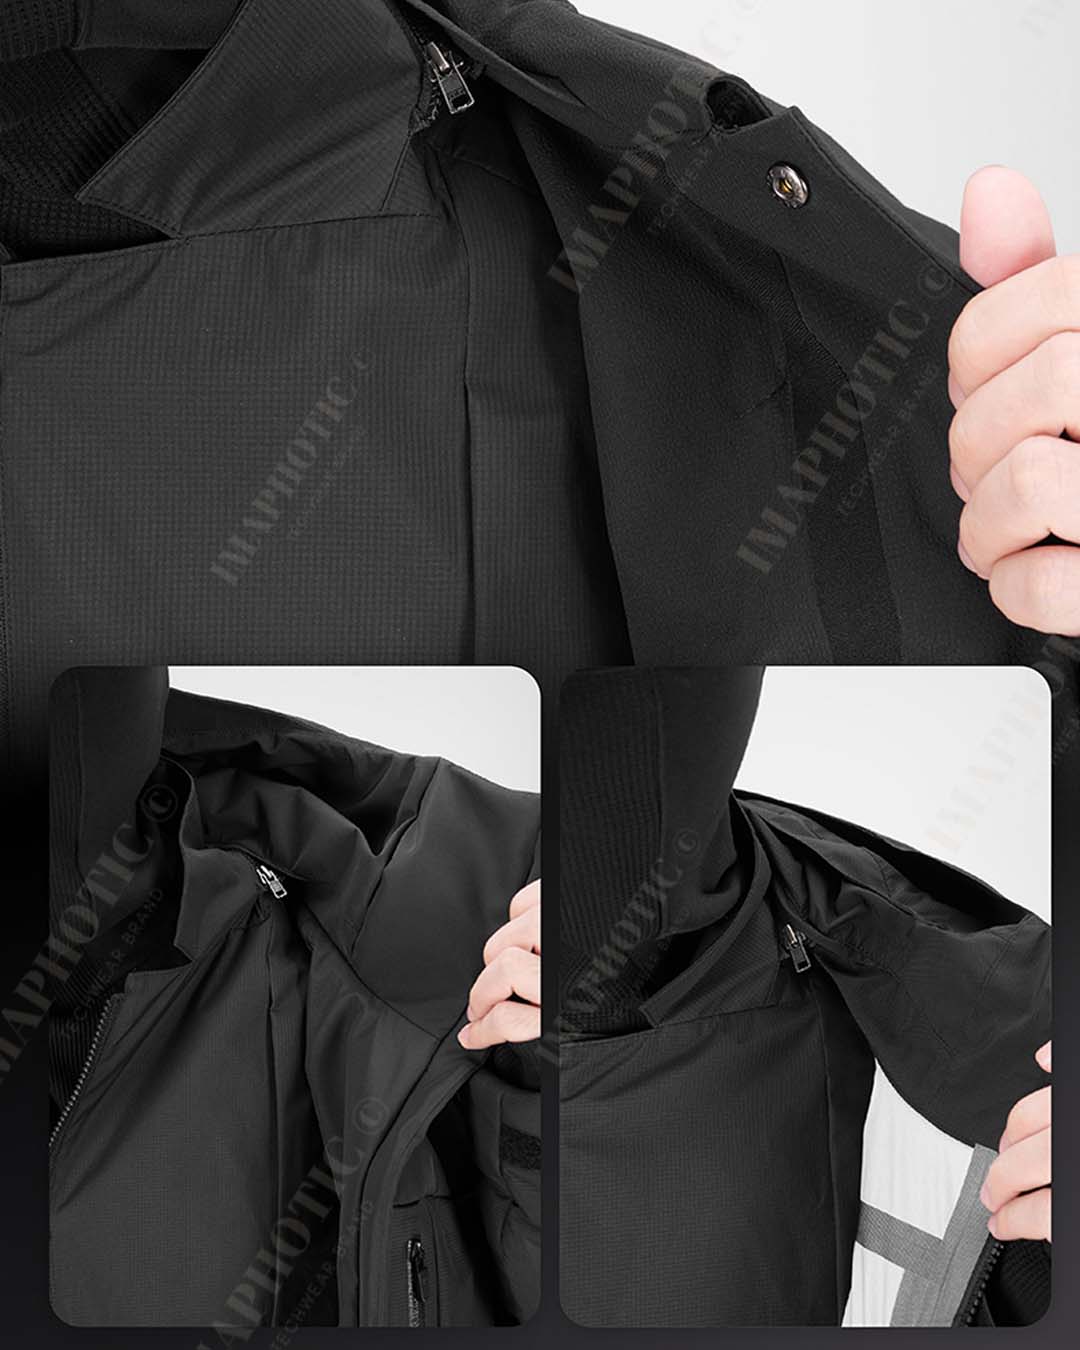 2-in-1 Harrington Tactical Jacket Converts to Waterproof Sling Bag